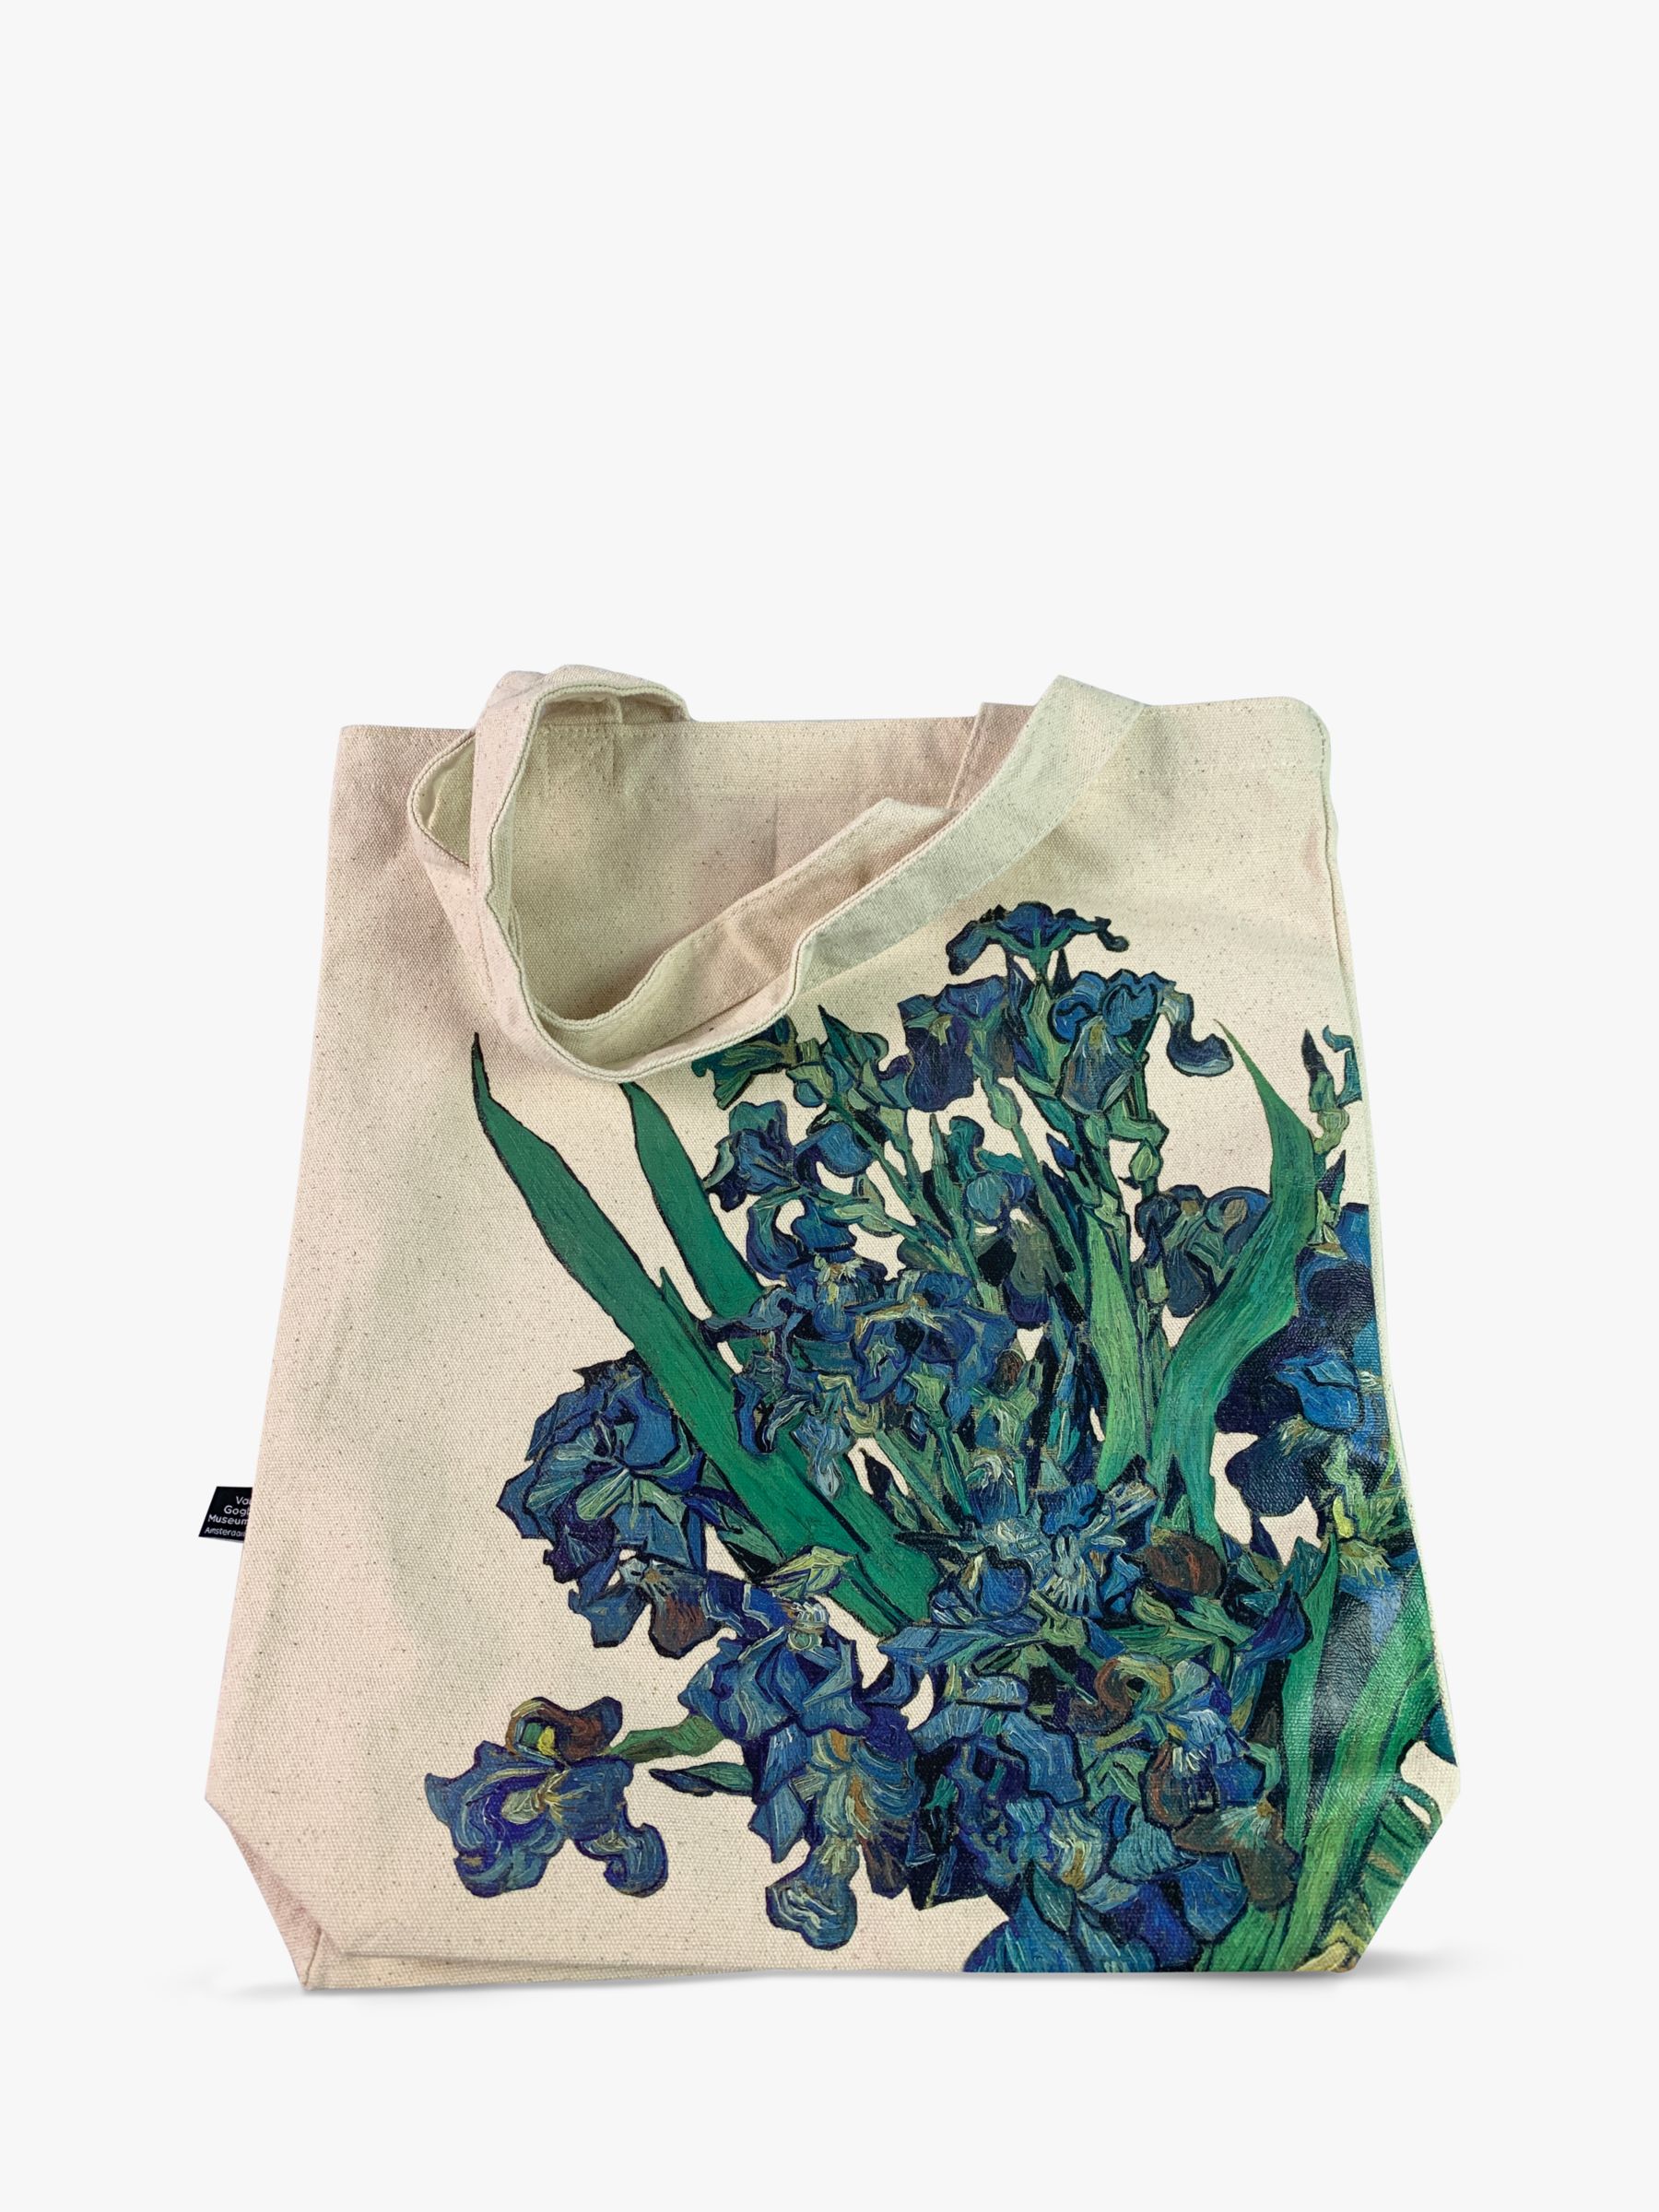 Van Gogh Iris Shoulder Bag